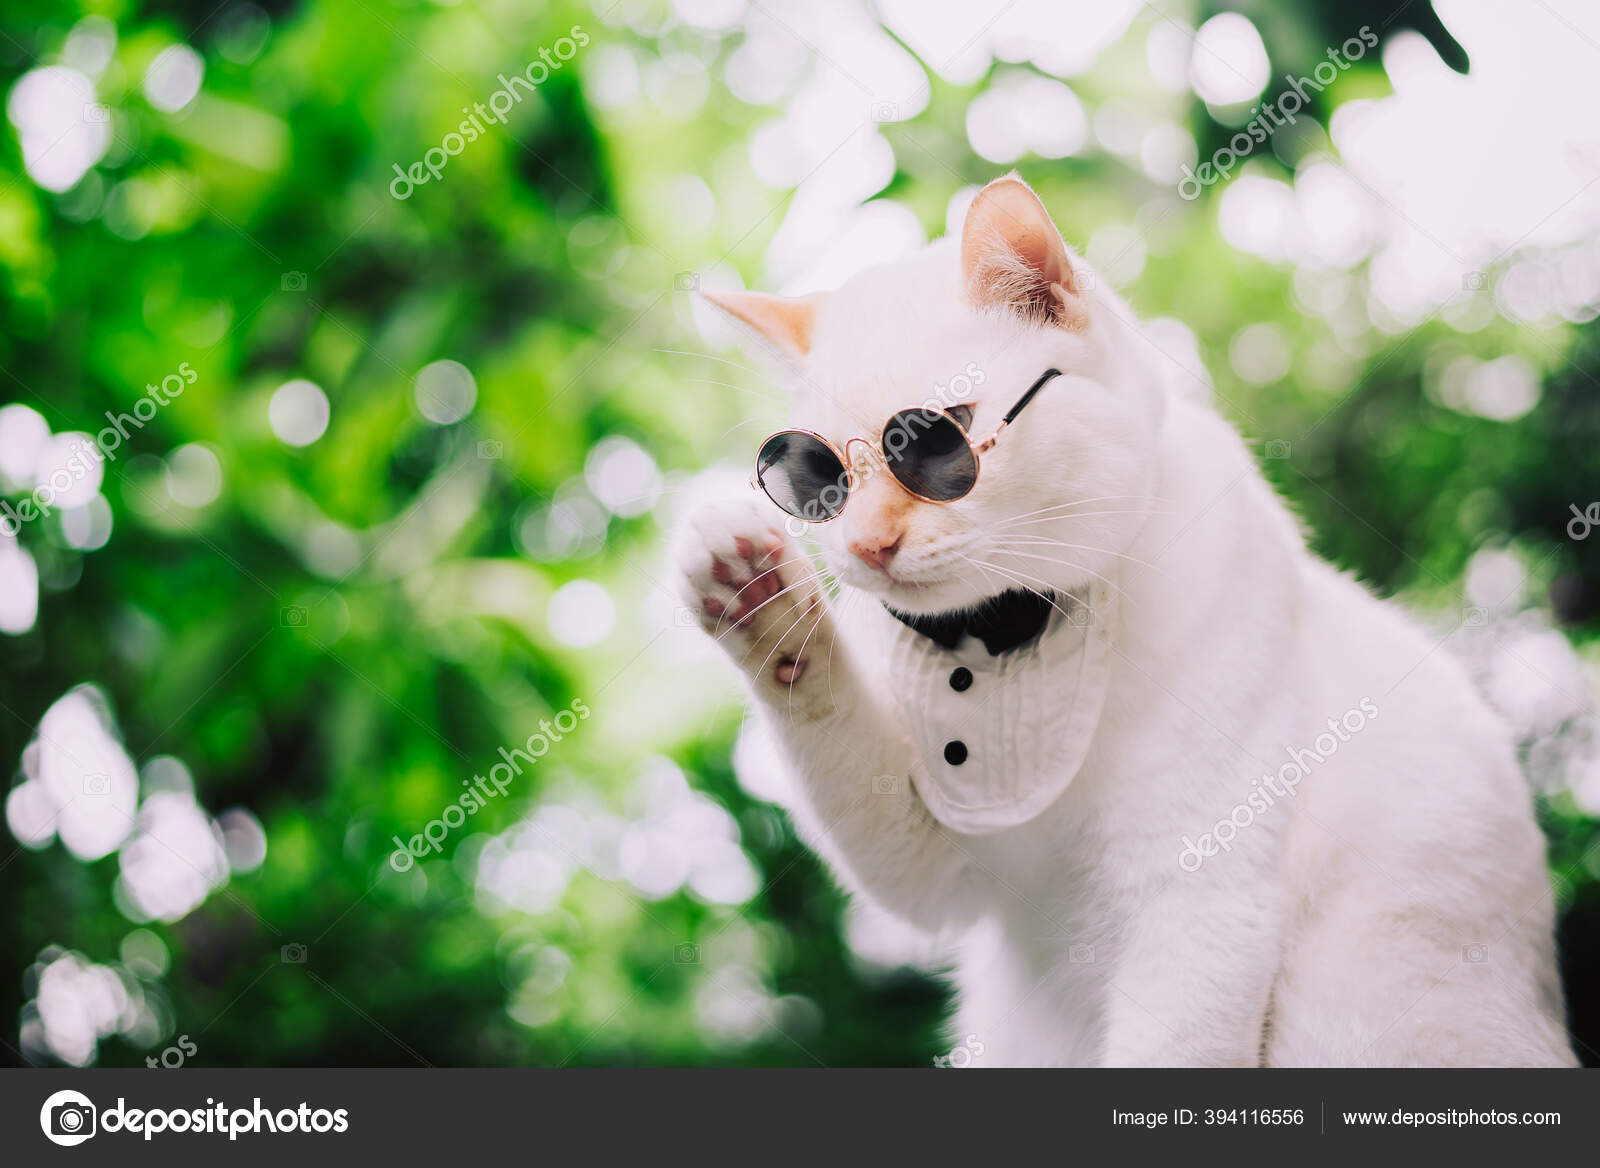 Mafia cat Stock Photos, Royalty Free Mafia cat Images | Depositphotos